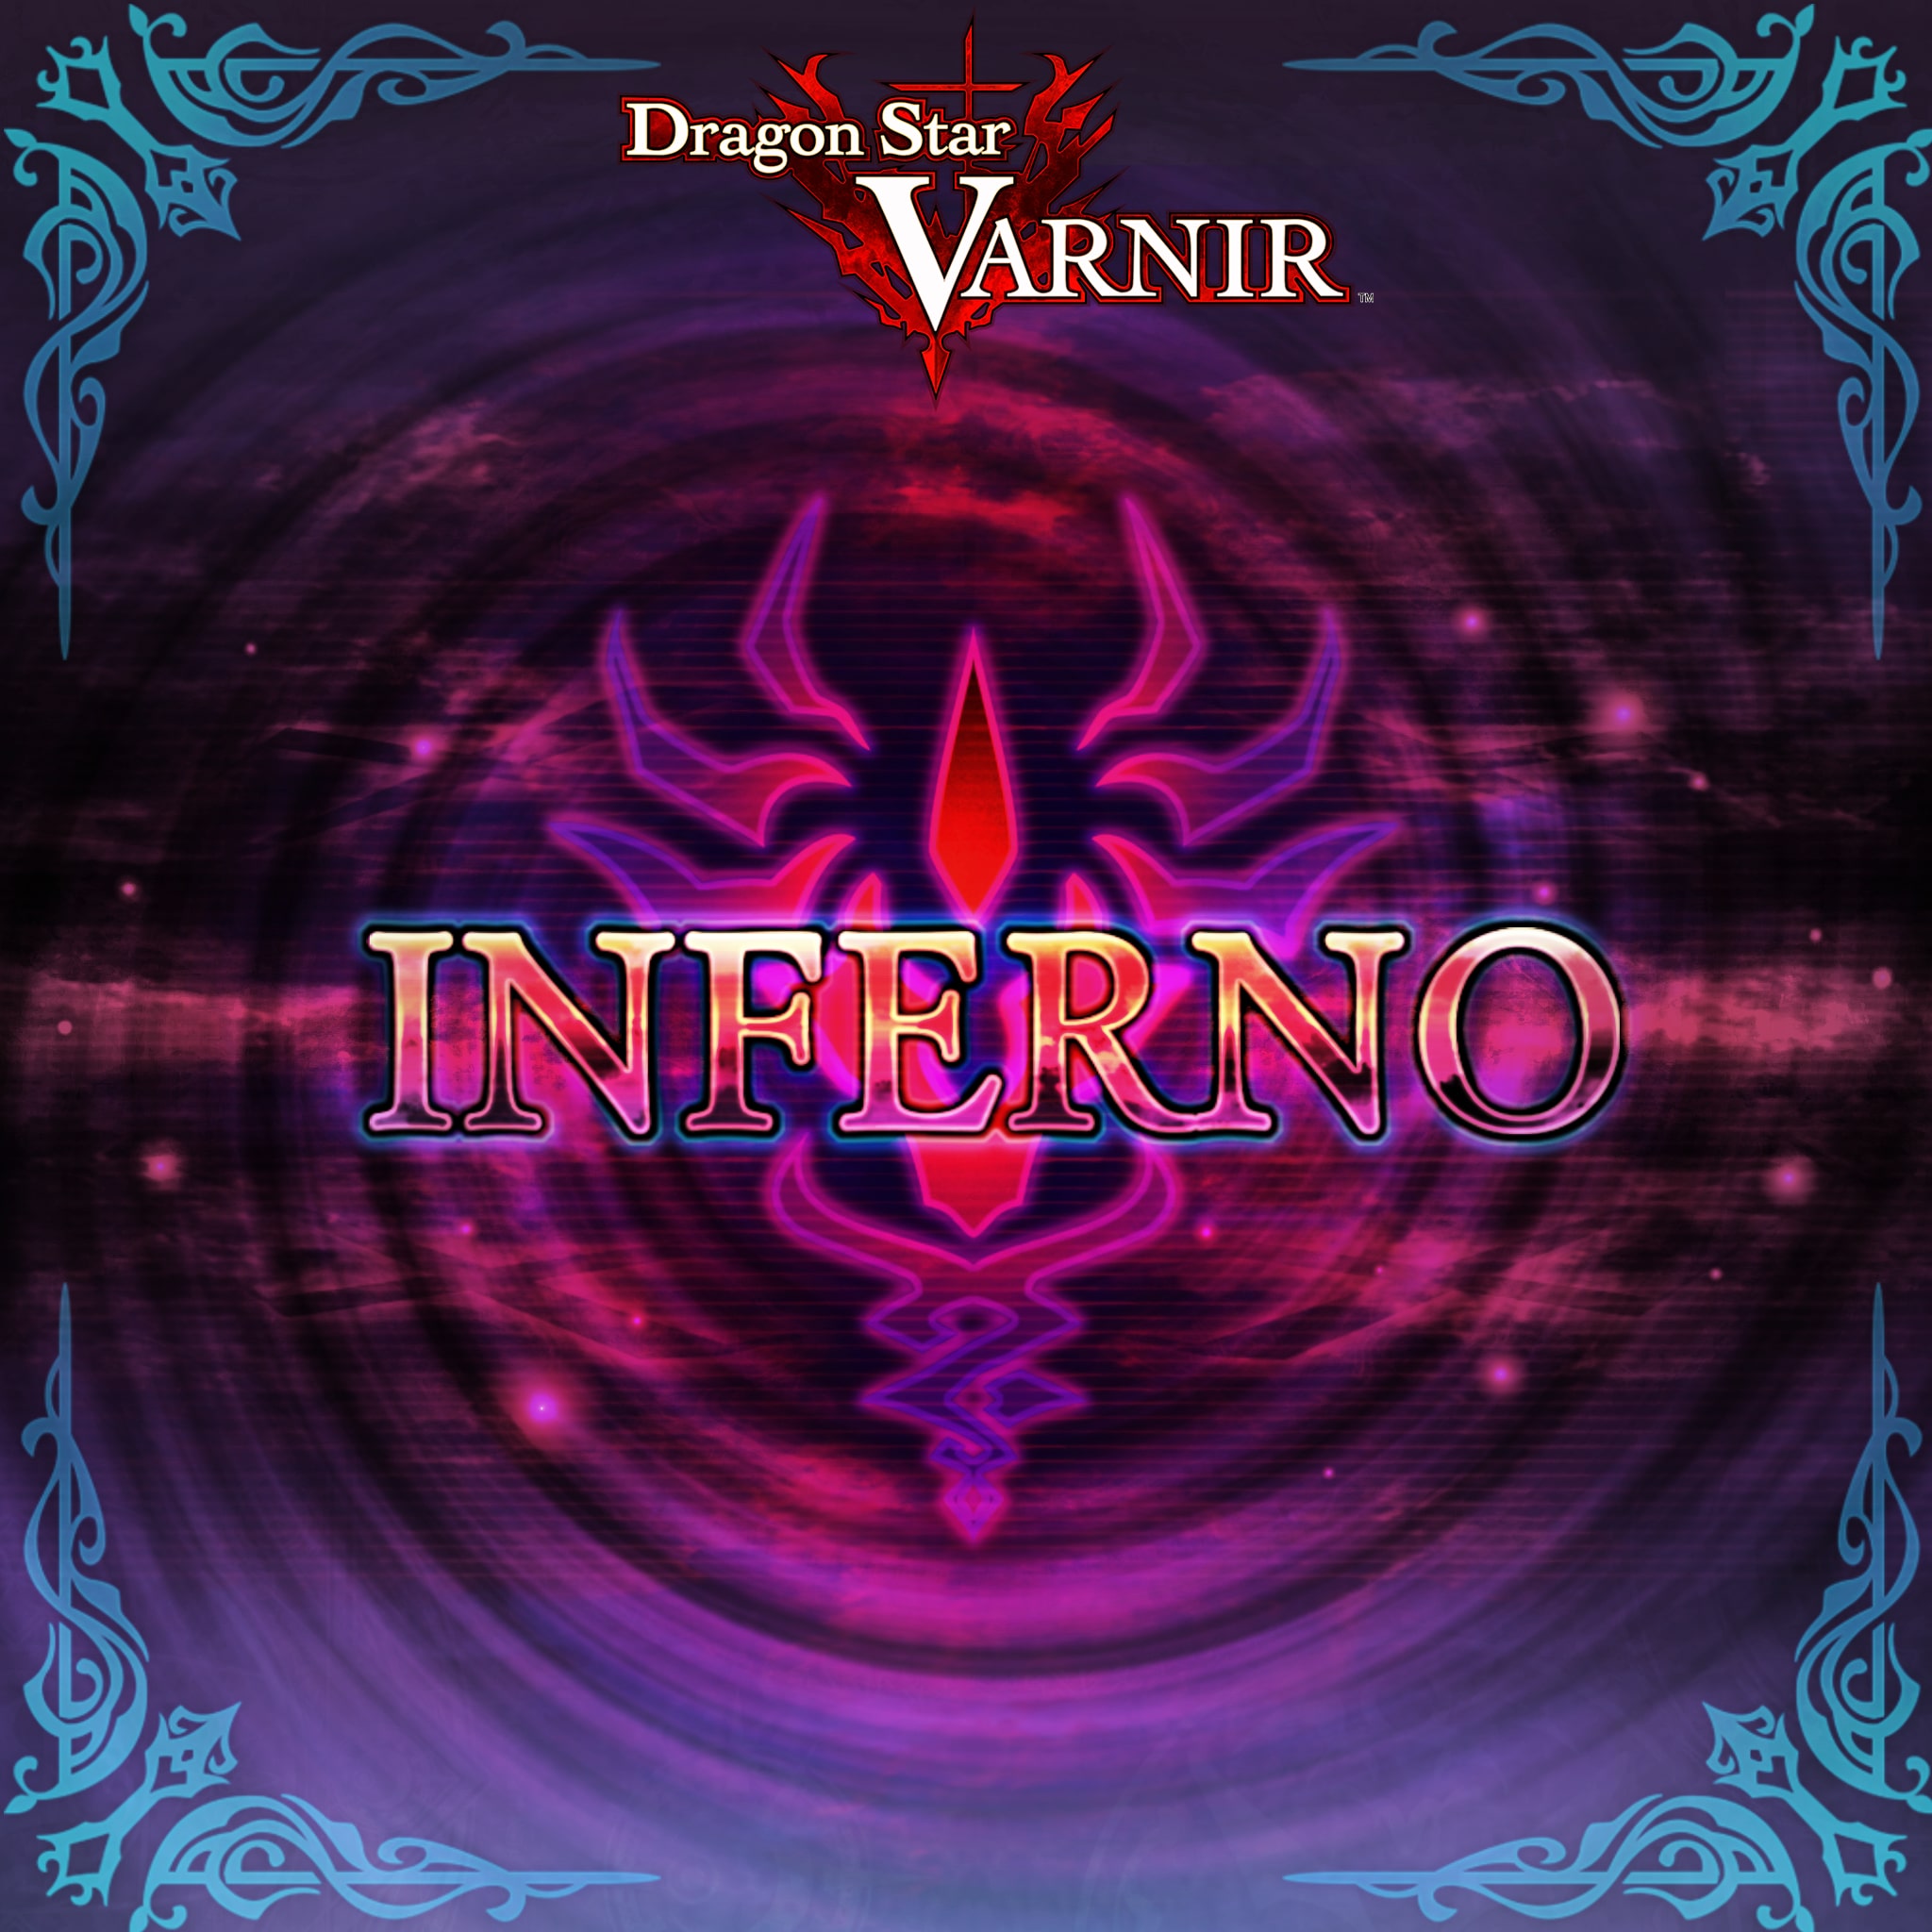 Dragon Star Varnir Ultimate Difficulty Released